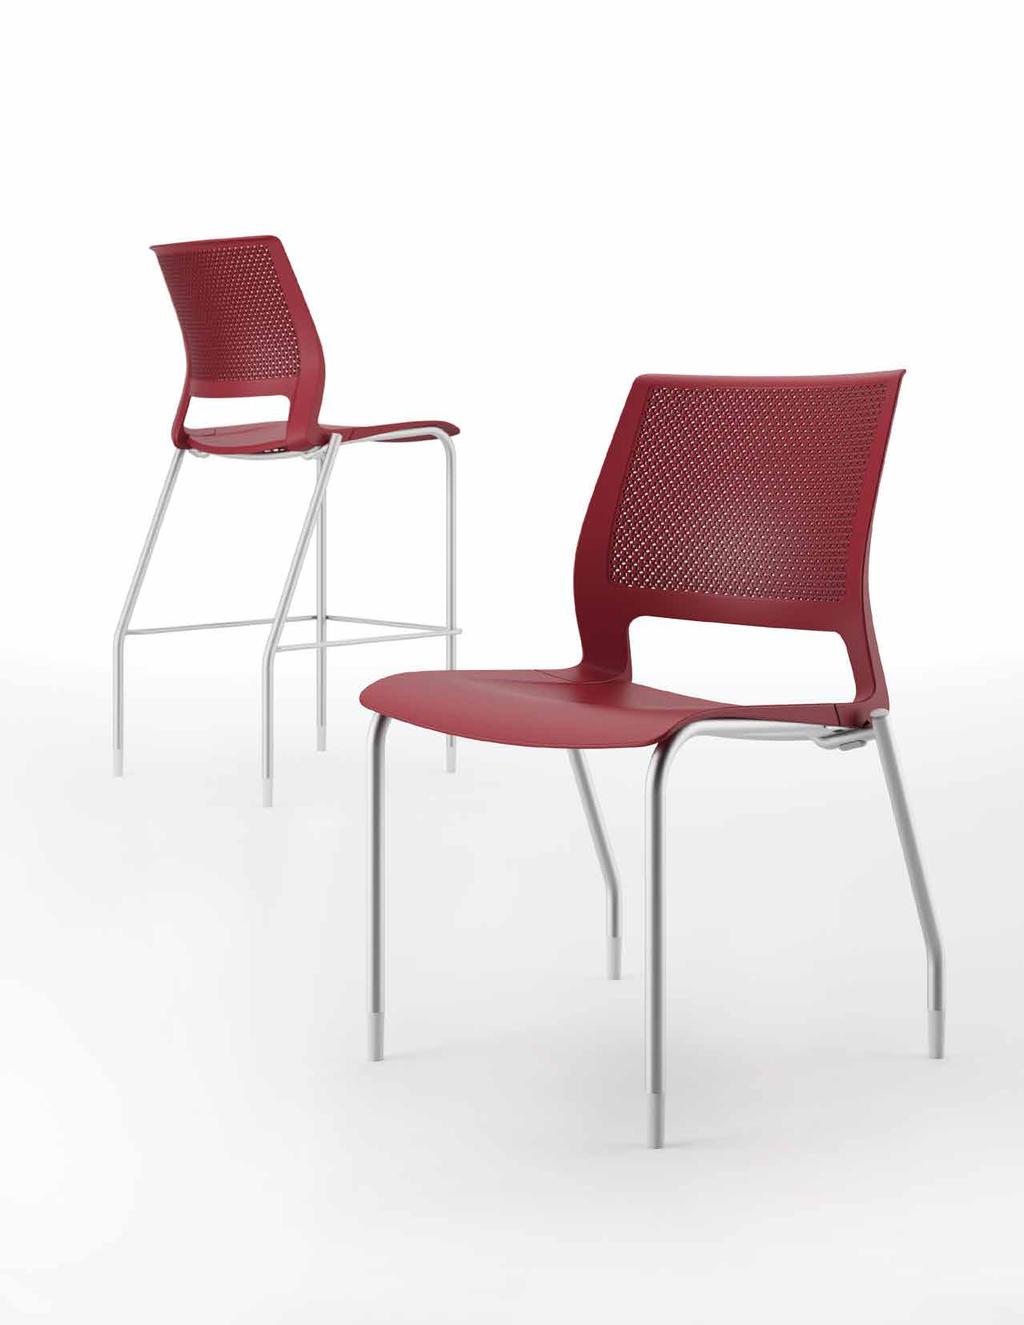 Lumin Lumin is an elegant contemporary multipurpose chair